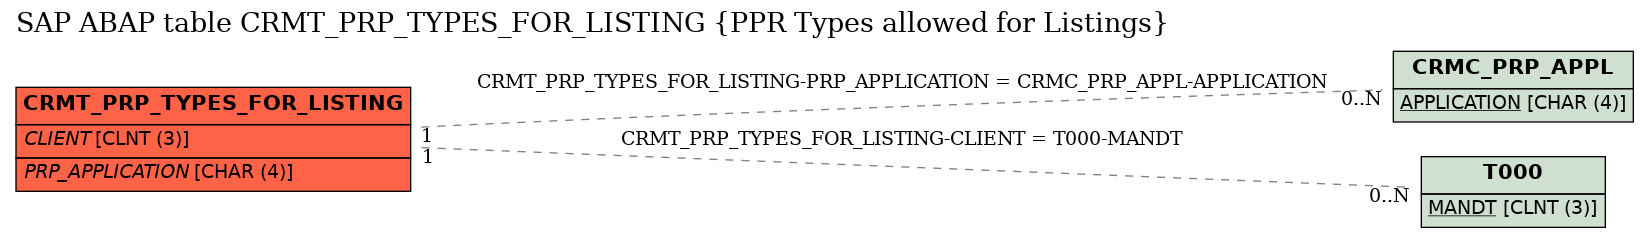 E-R Diagram for table CRMT_PRP_TYPES_FOR_LISTING (PPR Types allowed for Listings)